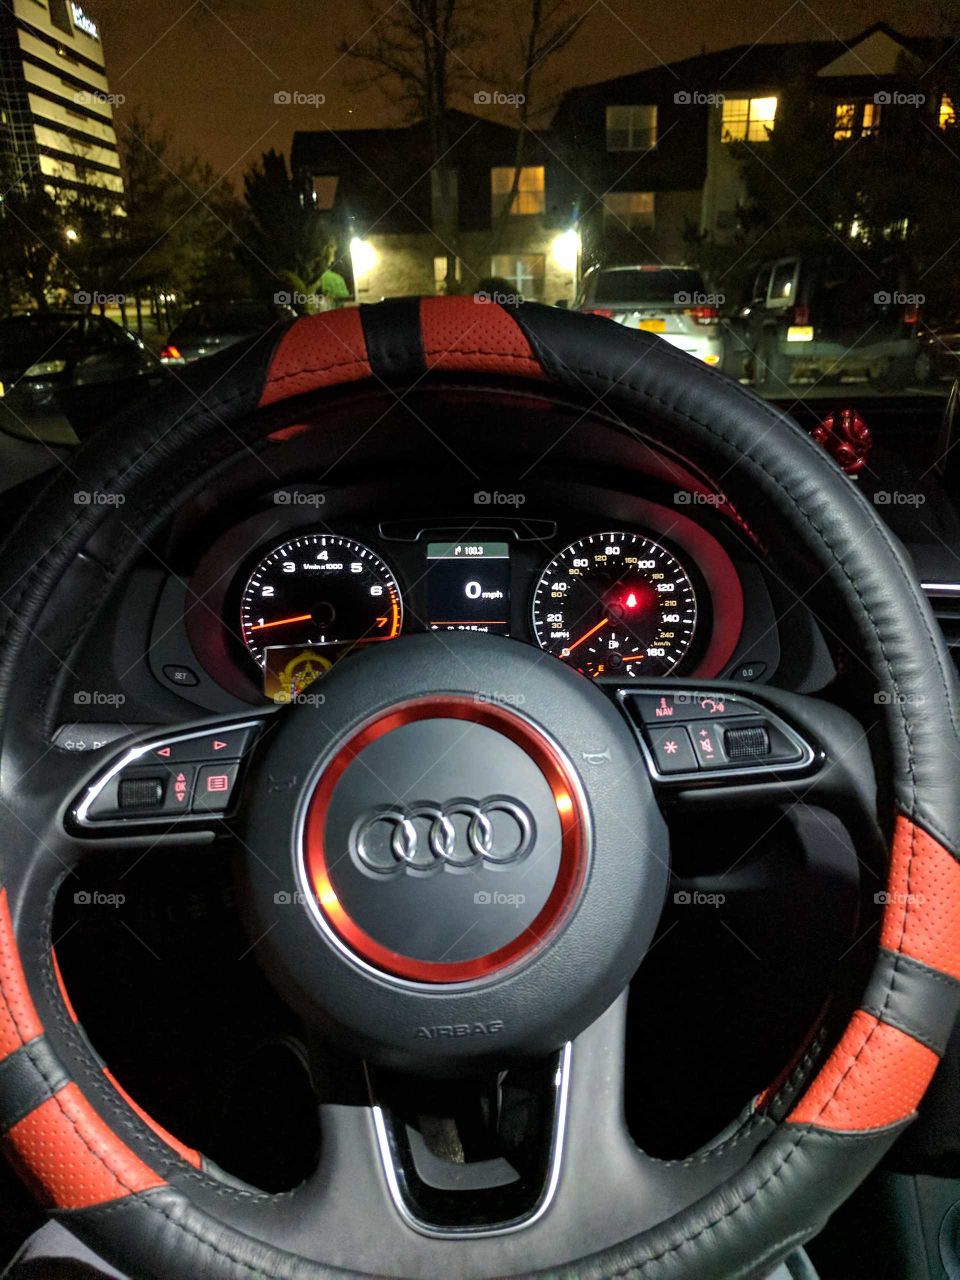 Audi interior red and black